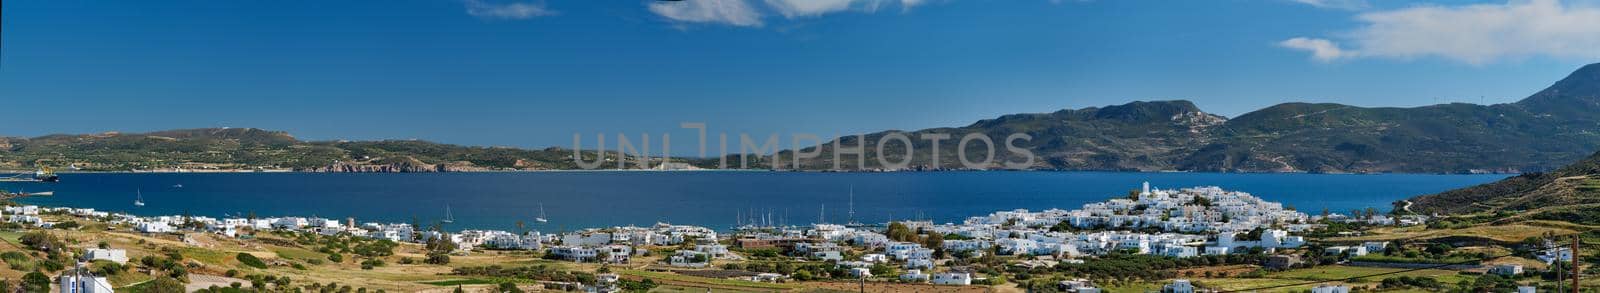 Panoramic view of Plaka village with traditional Greek church. Milos island, Greece by dimol